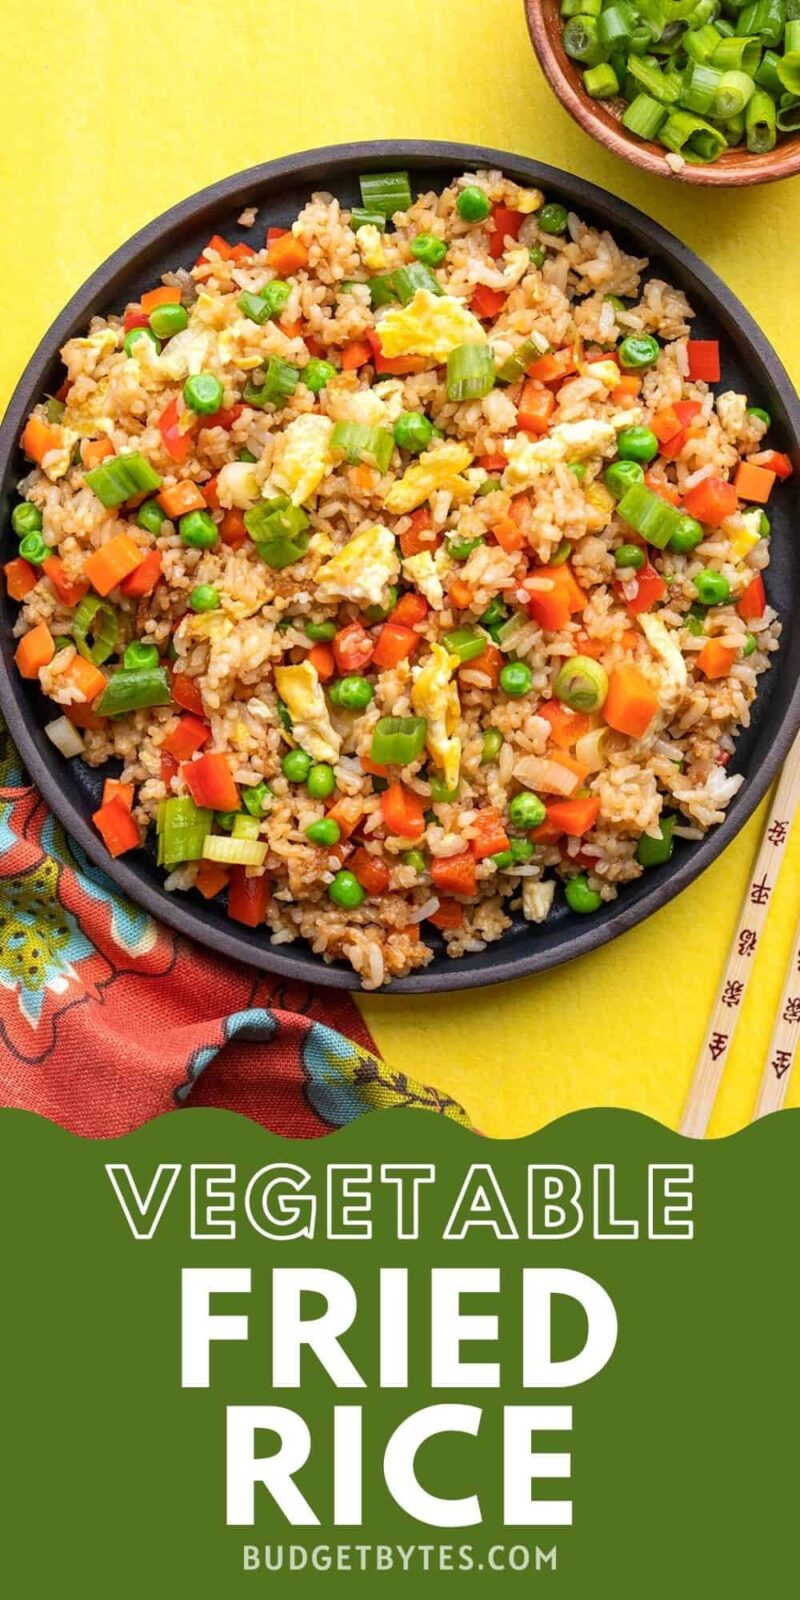 https://www.budgetbytes.com/wp-content/uploads/2022/03/Vegetable-Fried-Rice-PIN1-800x1600.jpg